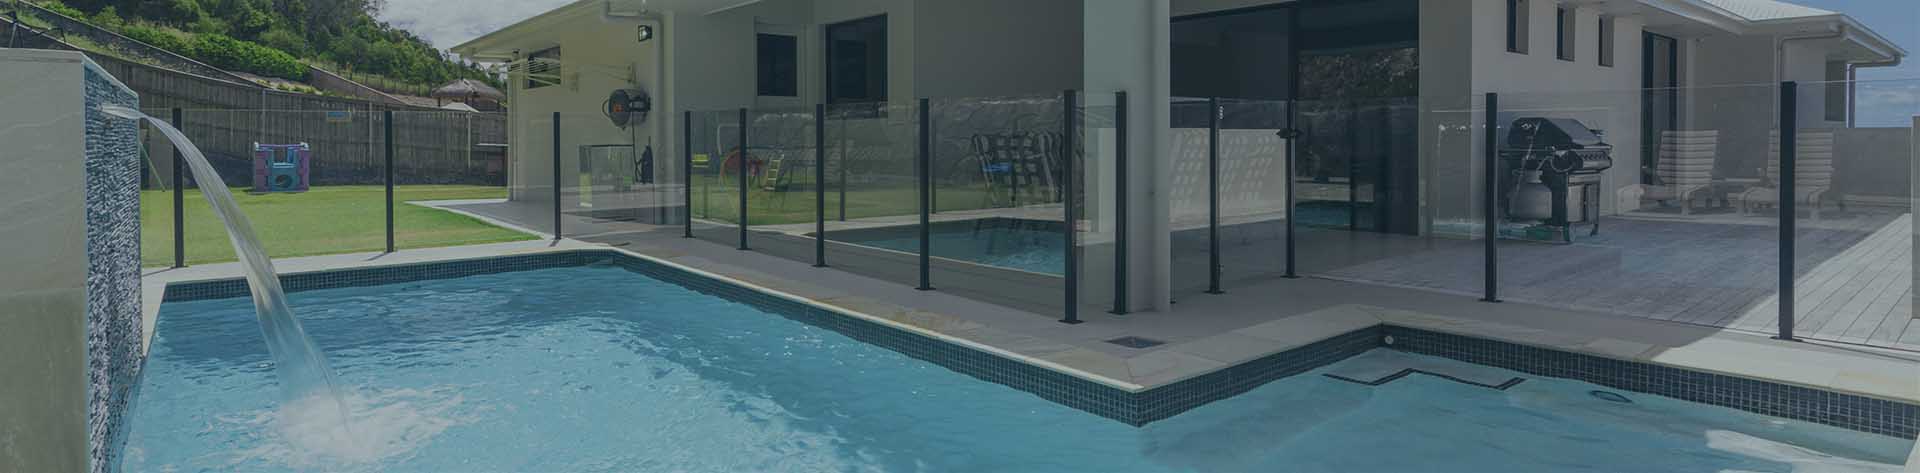 rental house swimming pool